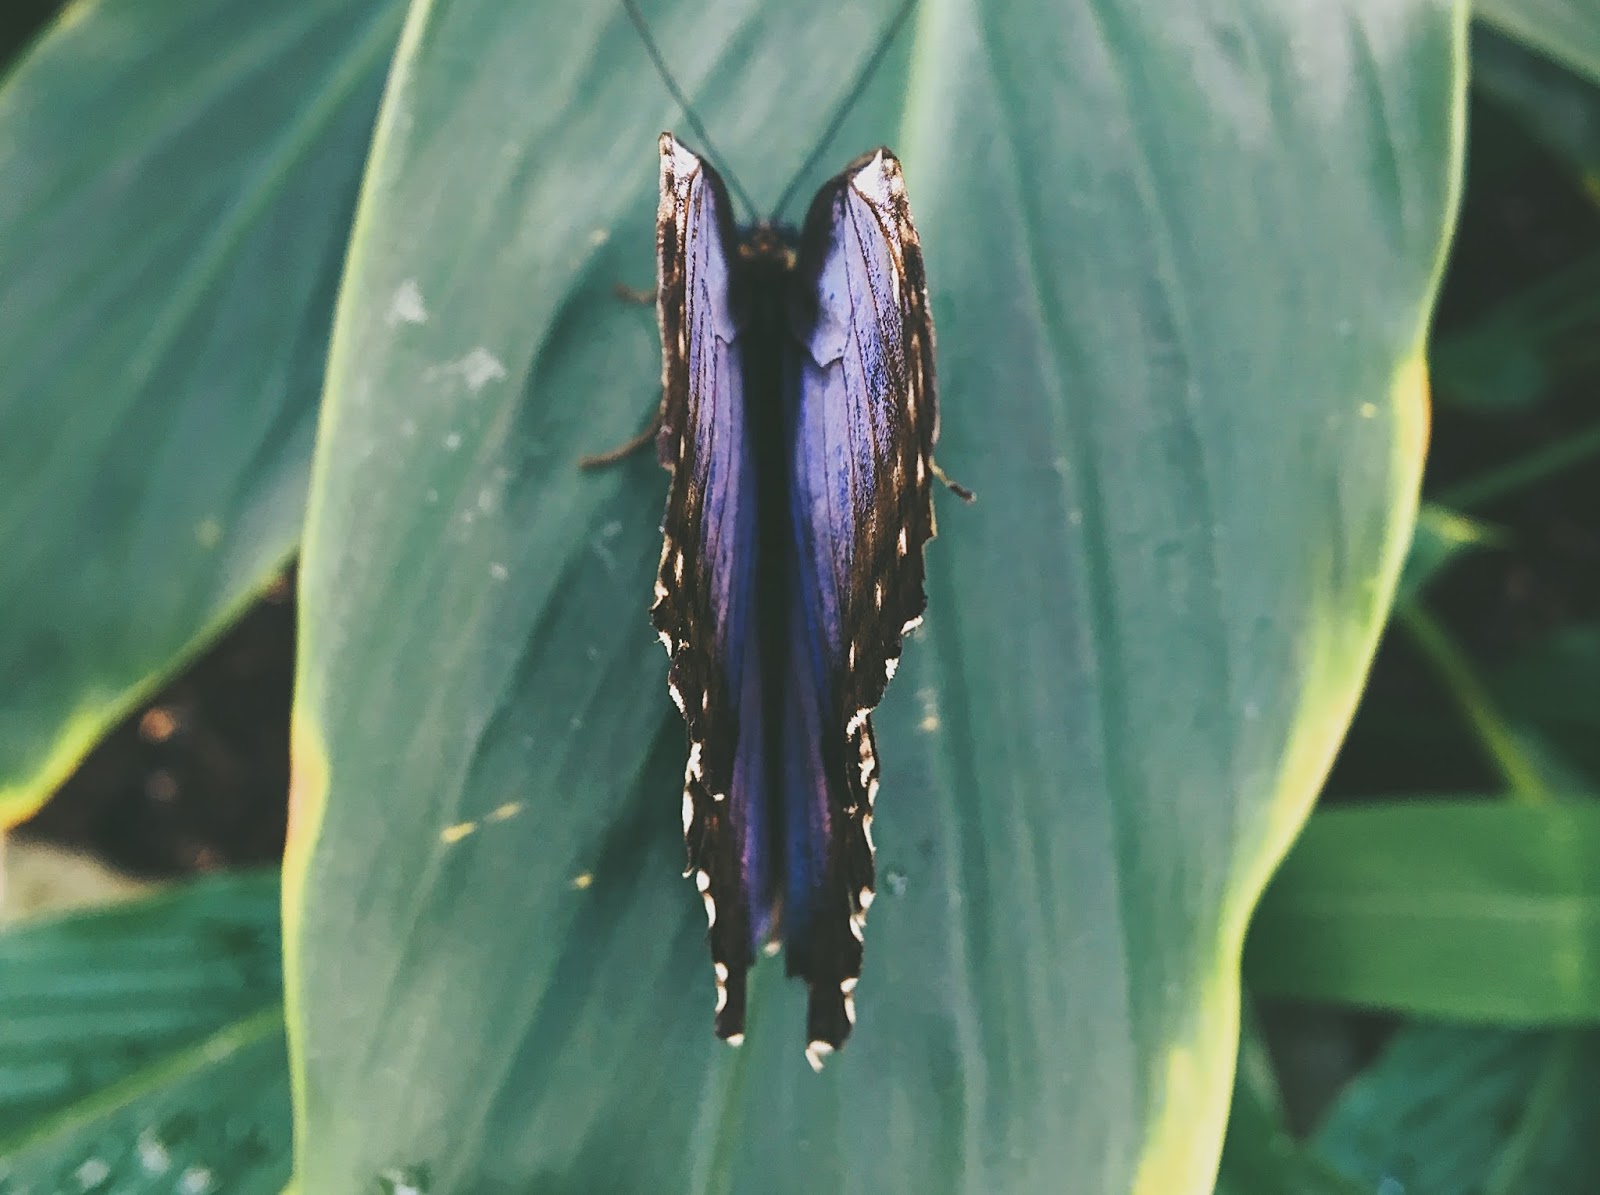 blue butterfly on leaf